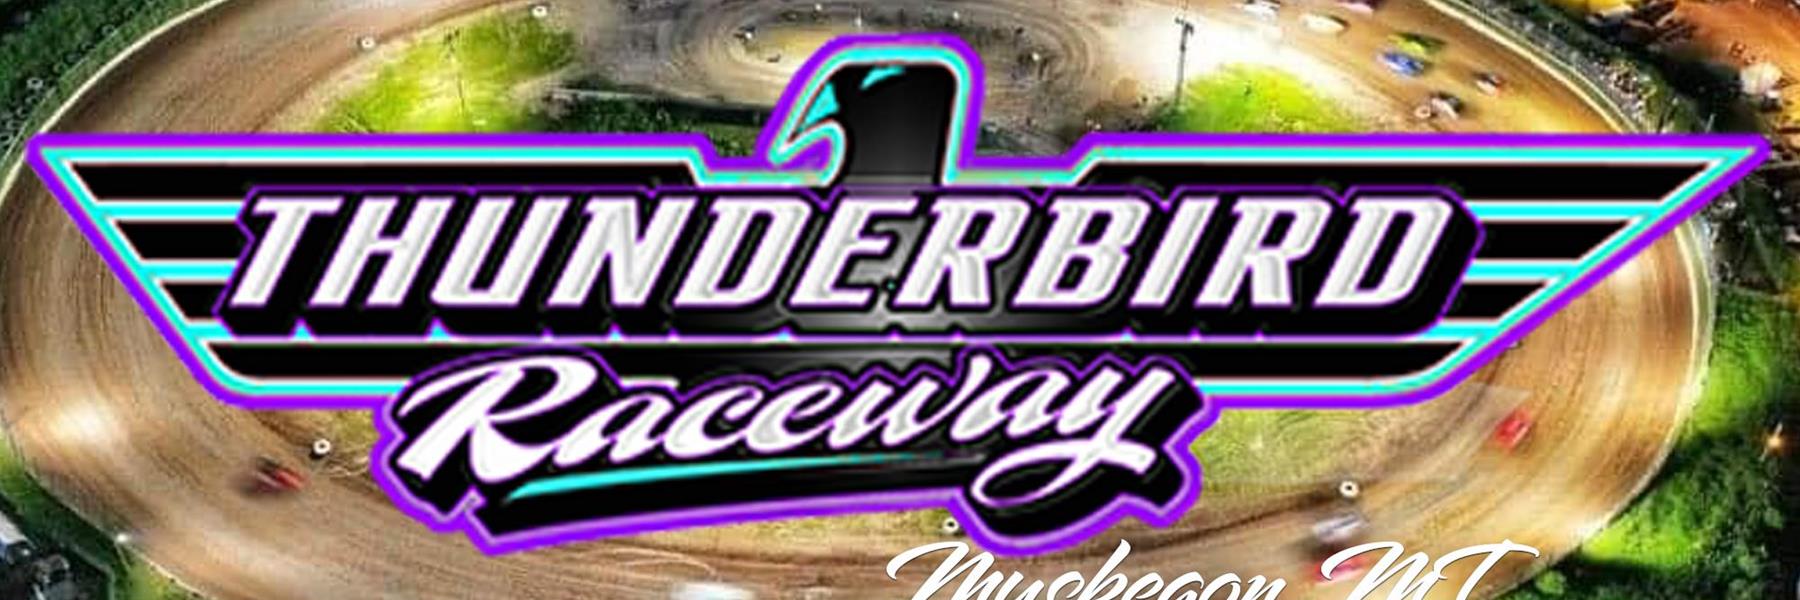 8/28/2021 - Thunderbird Raceway